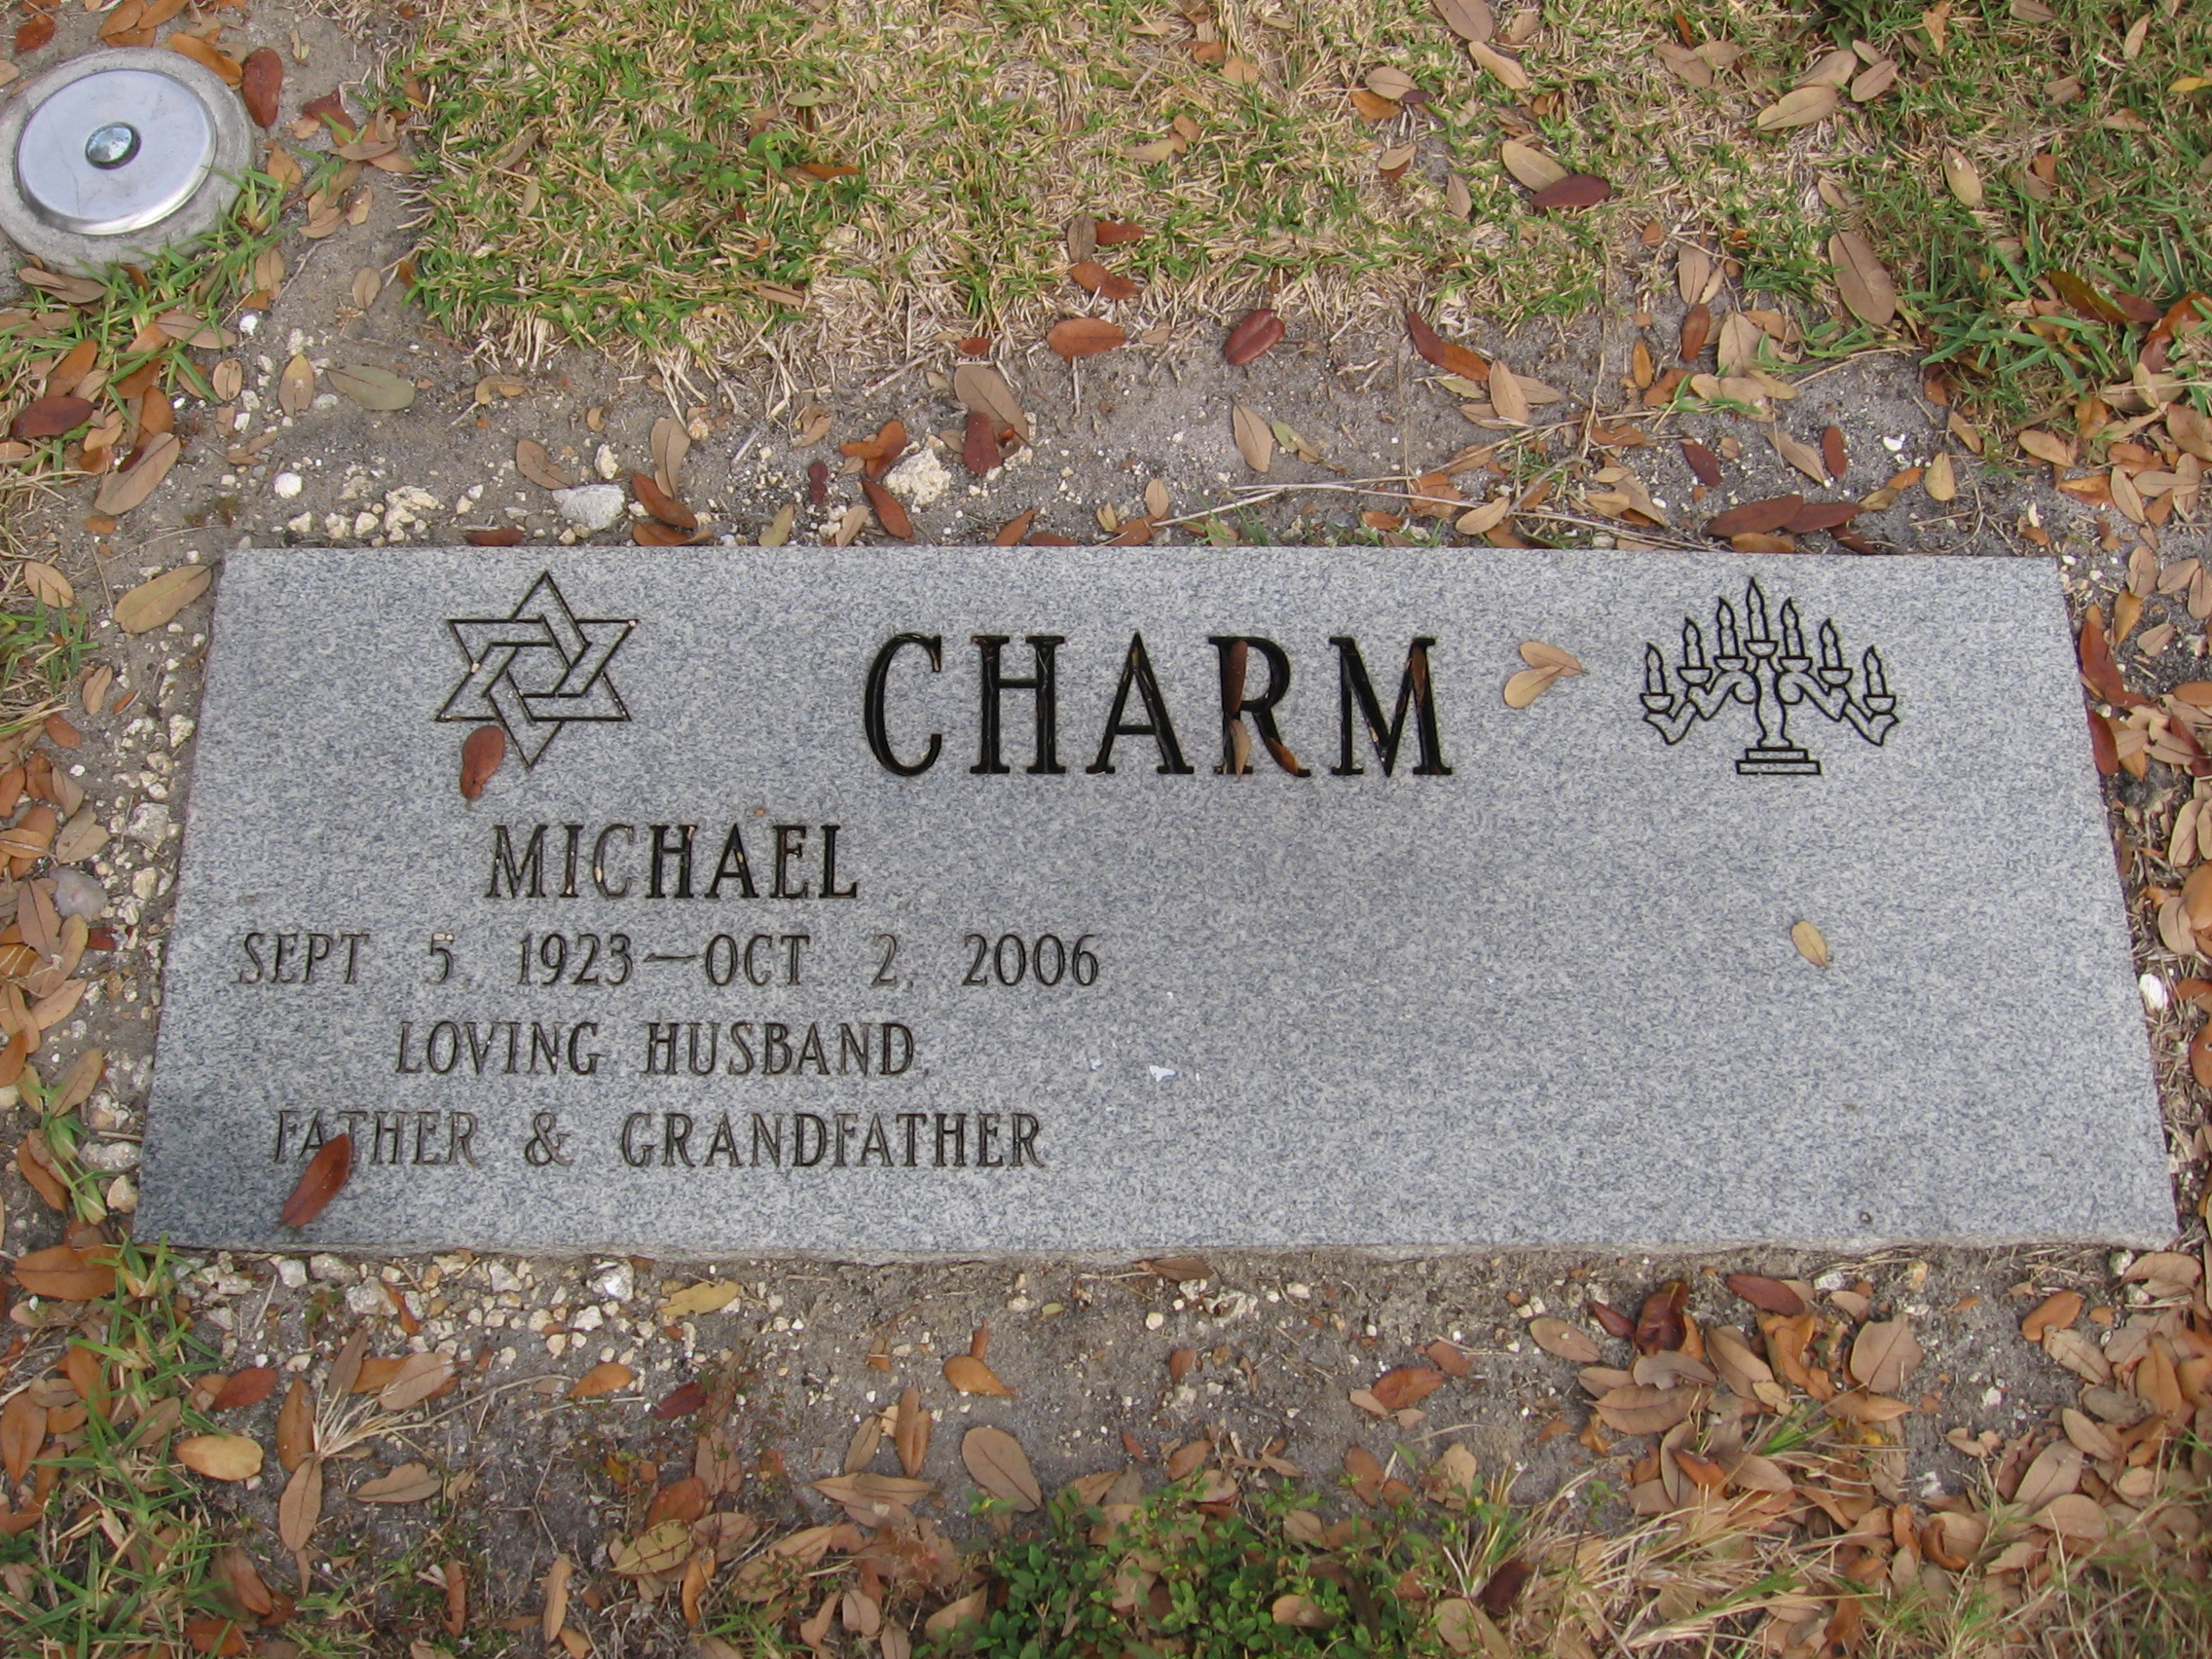 Michael Charm